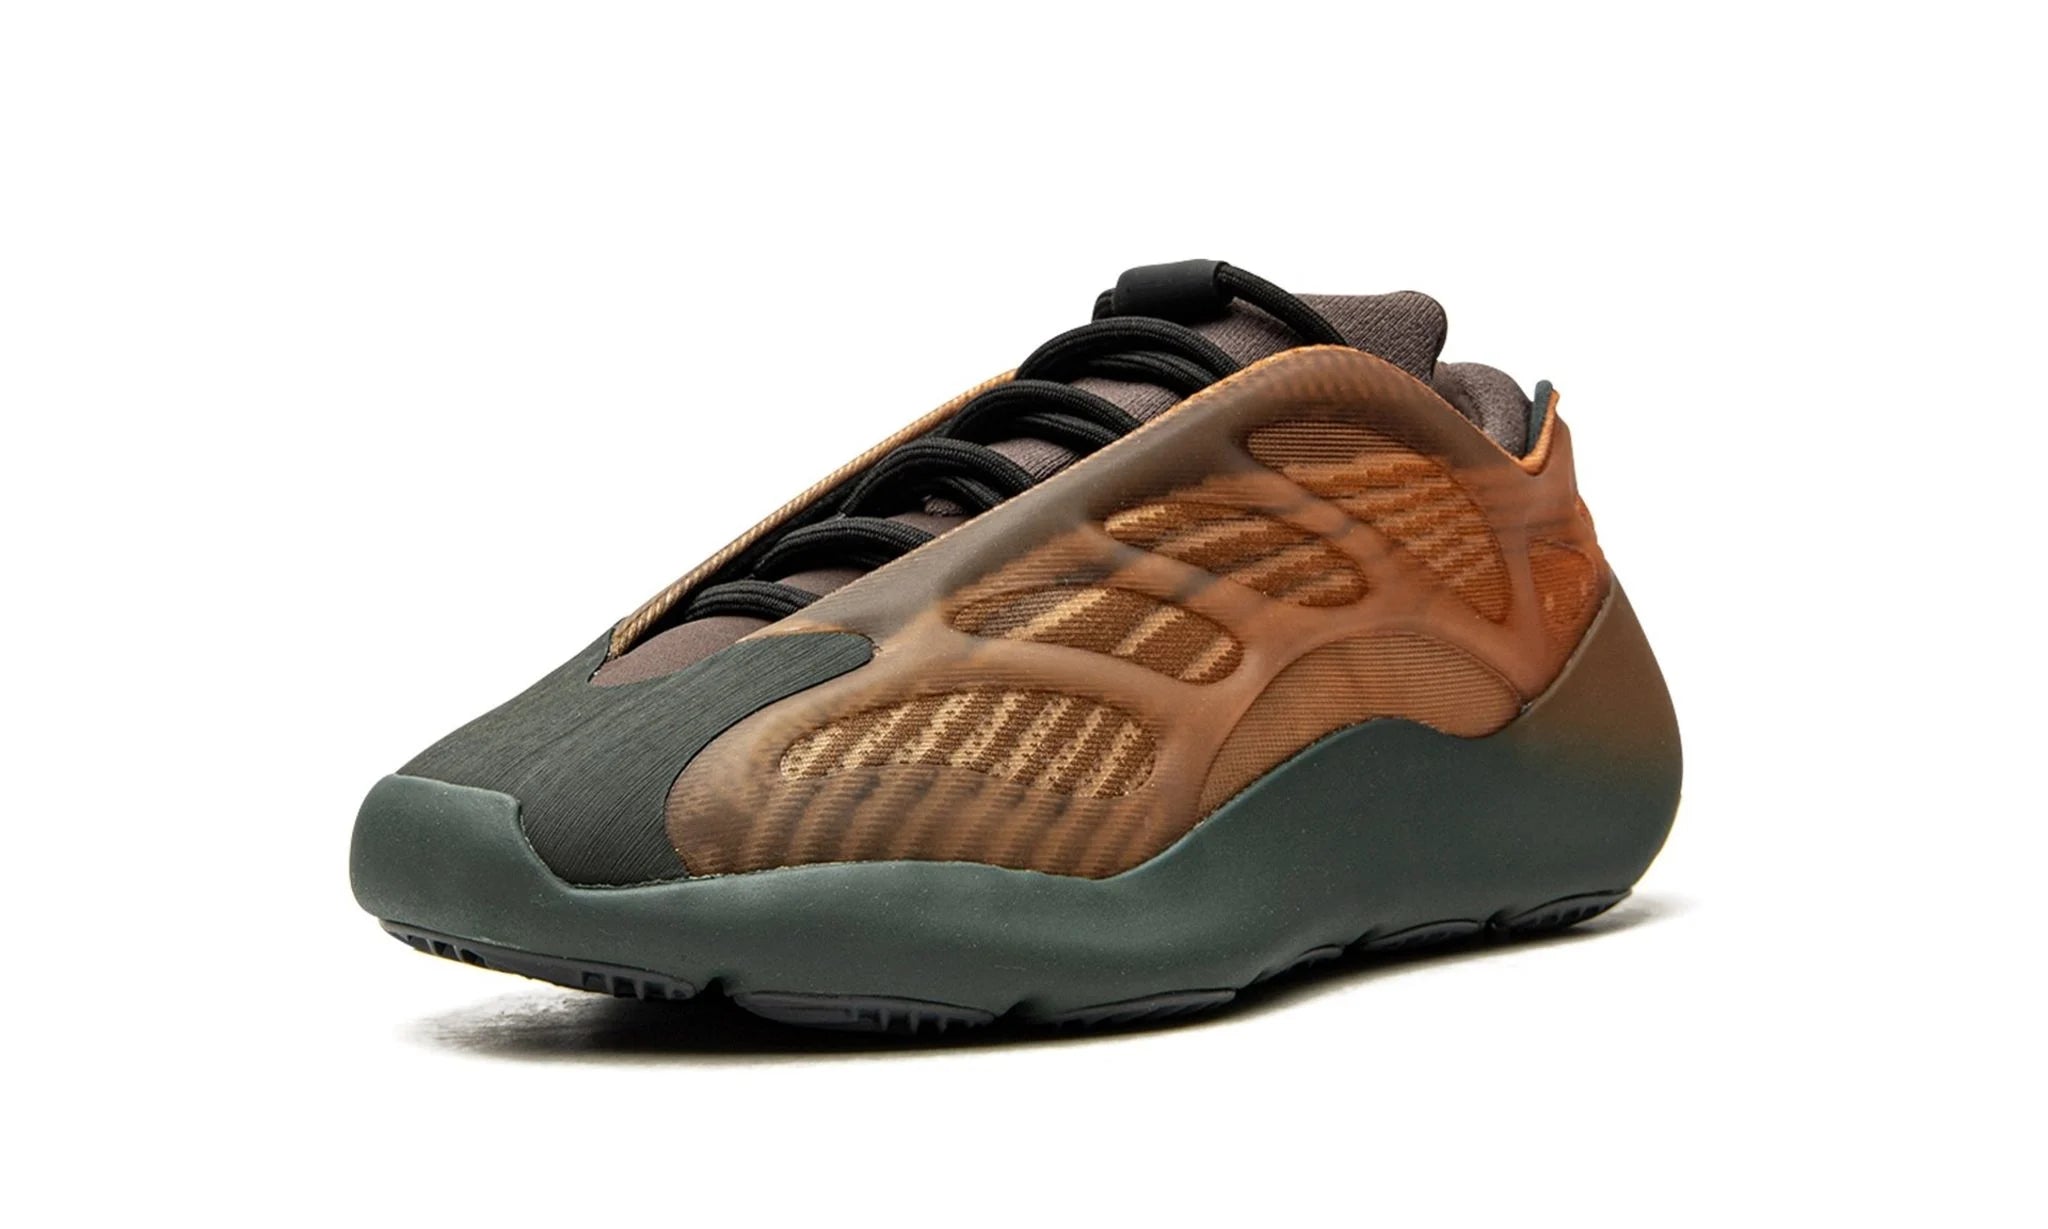 Adidas Yeezy 700 V3 Copper Fade - Yeezy 700 - Pirri